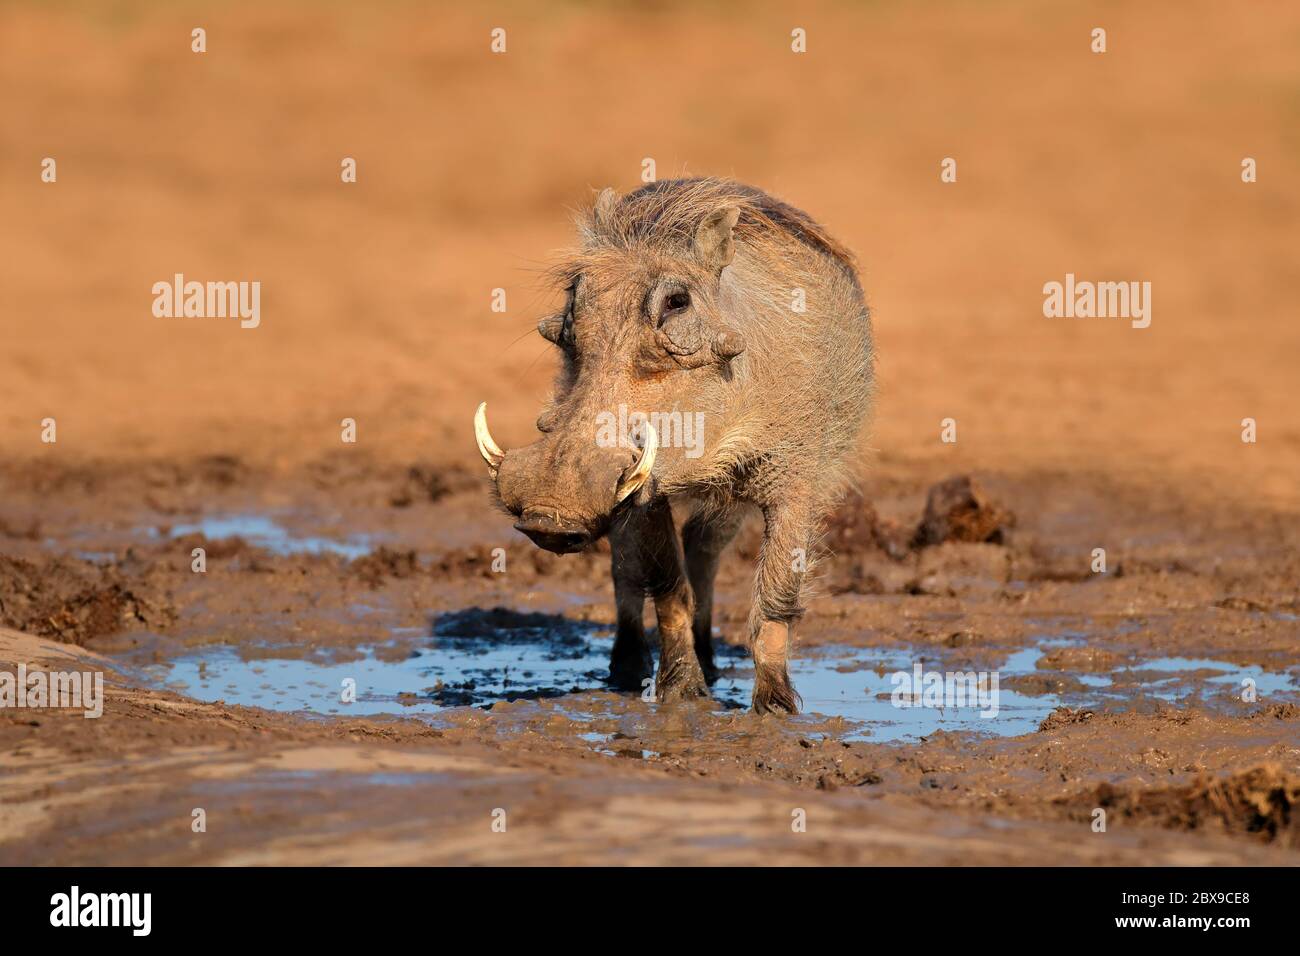 A warthog (Phacochoerus africanus) at a natural waterhole, South Africa Stock Photo